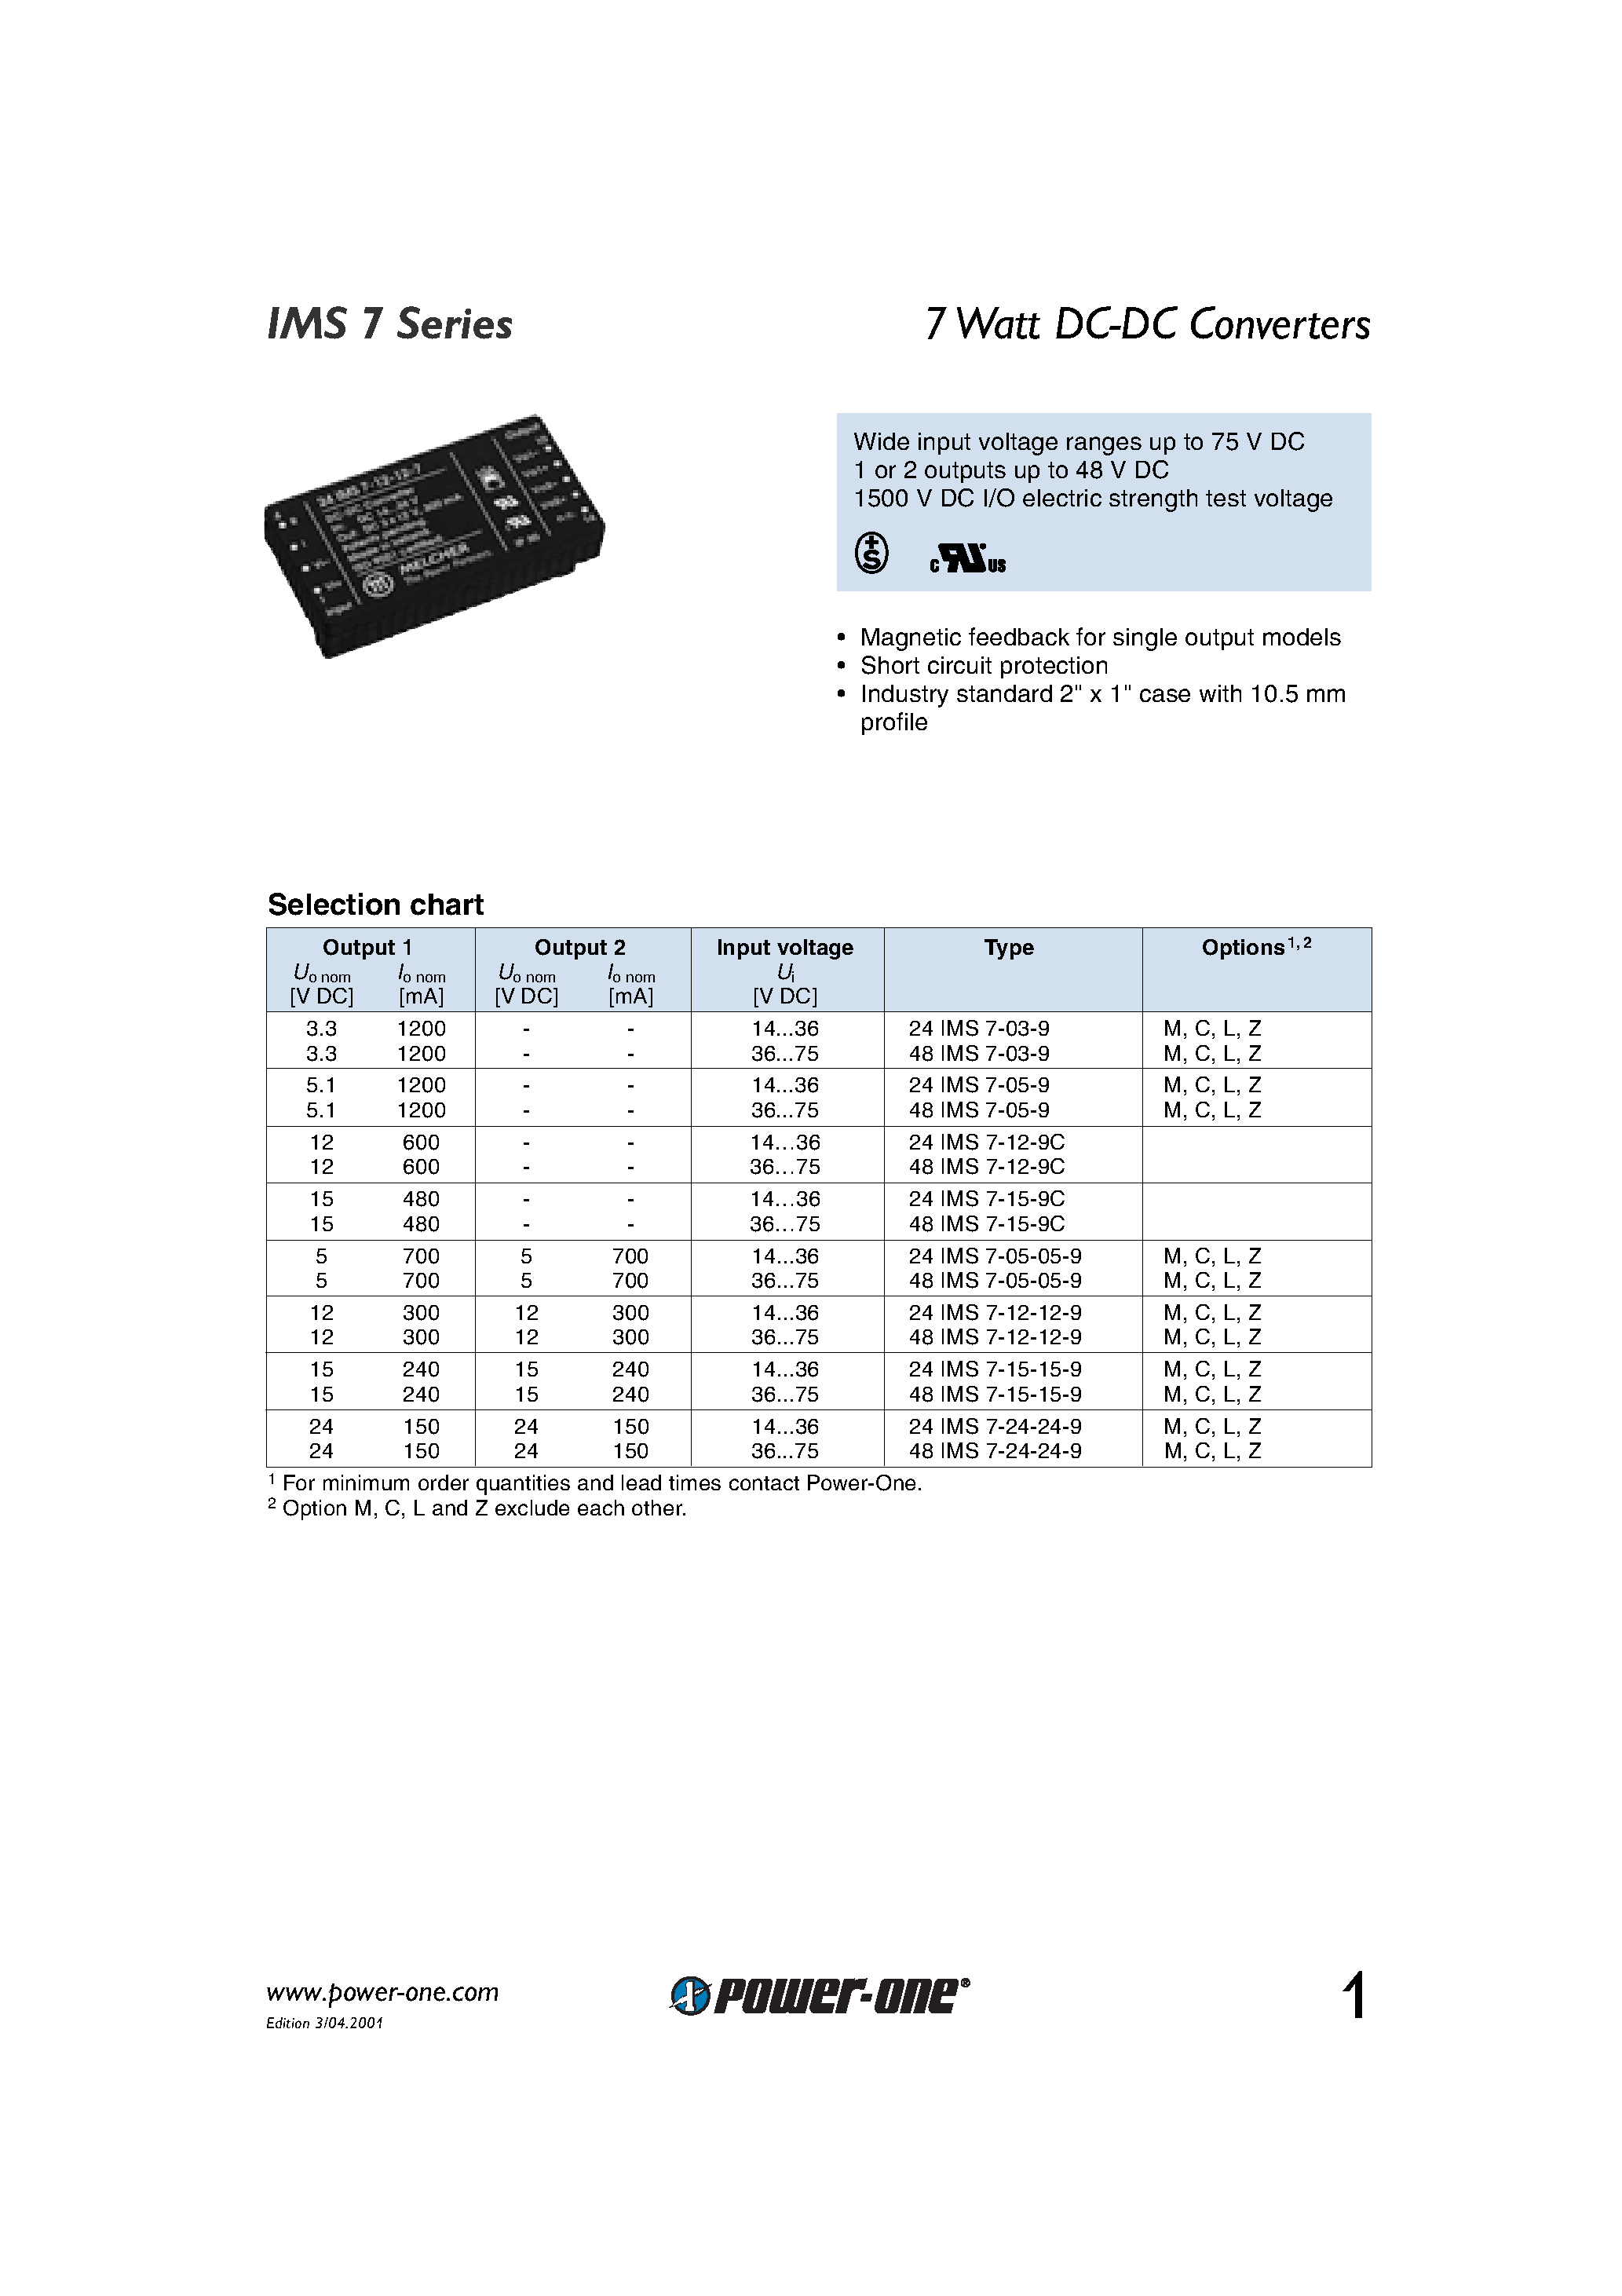 Datasheet 48IMS7-24-24-9 - 7 Watt DC-DC Converters page 1